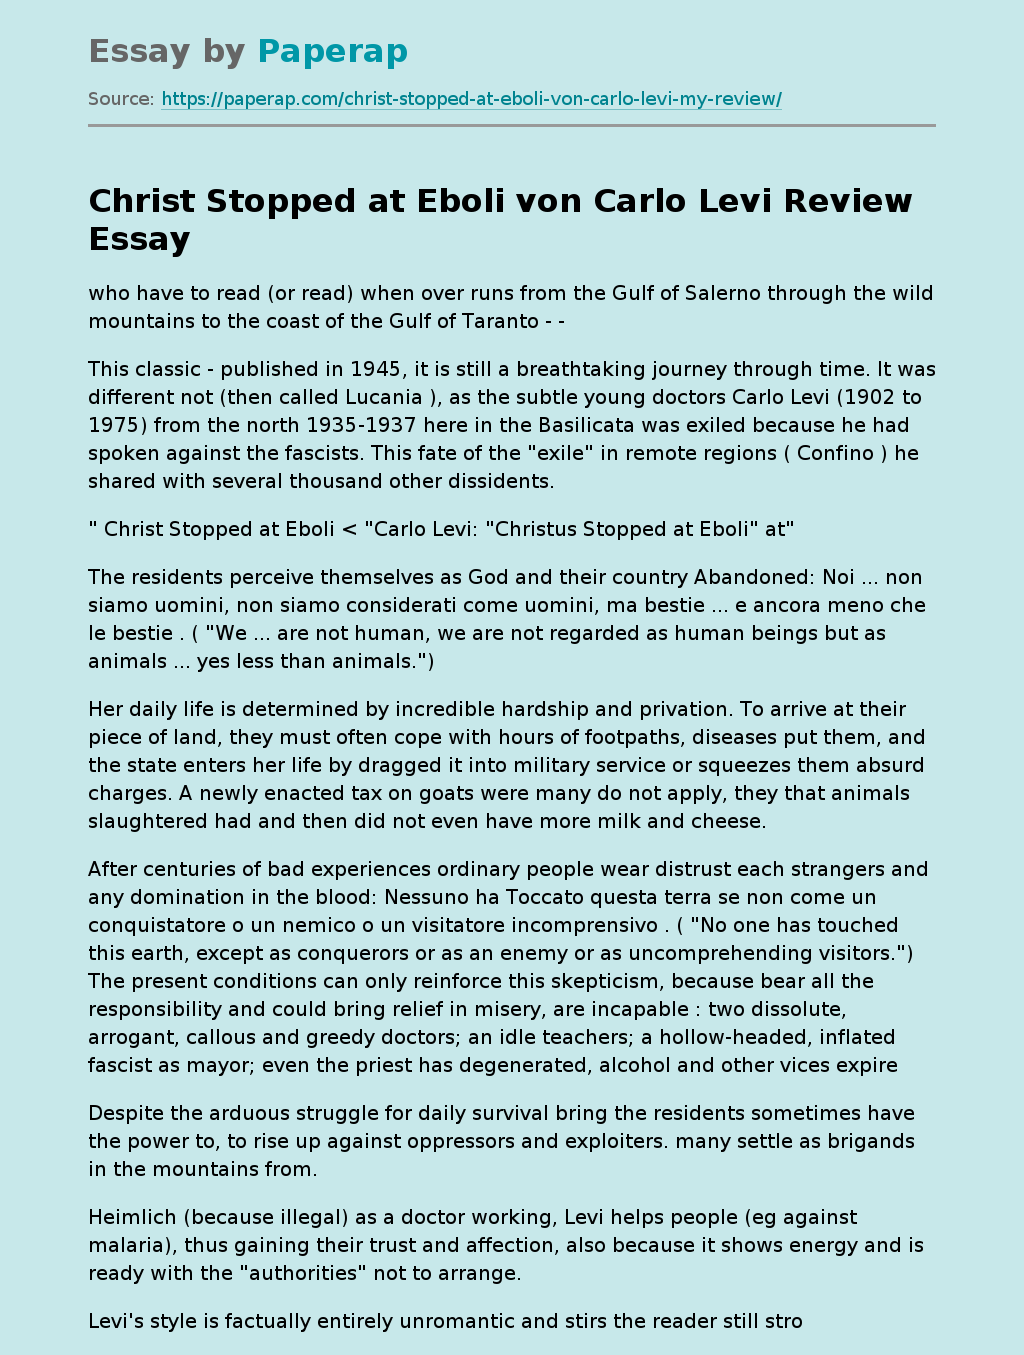 "Christ Stopped at Eboli" by Carlo Levi